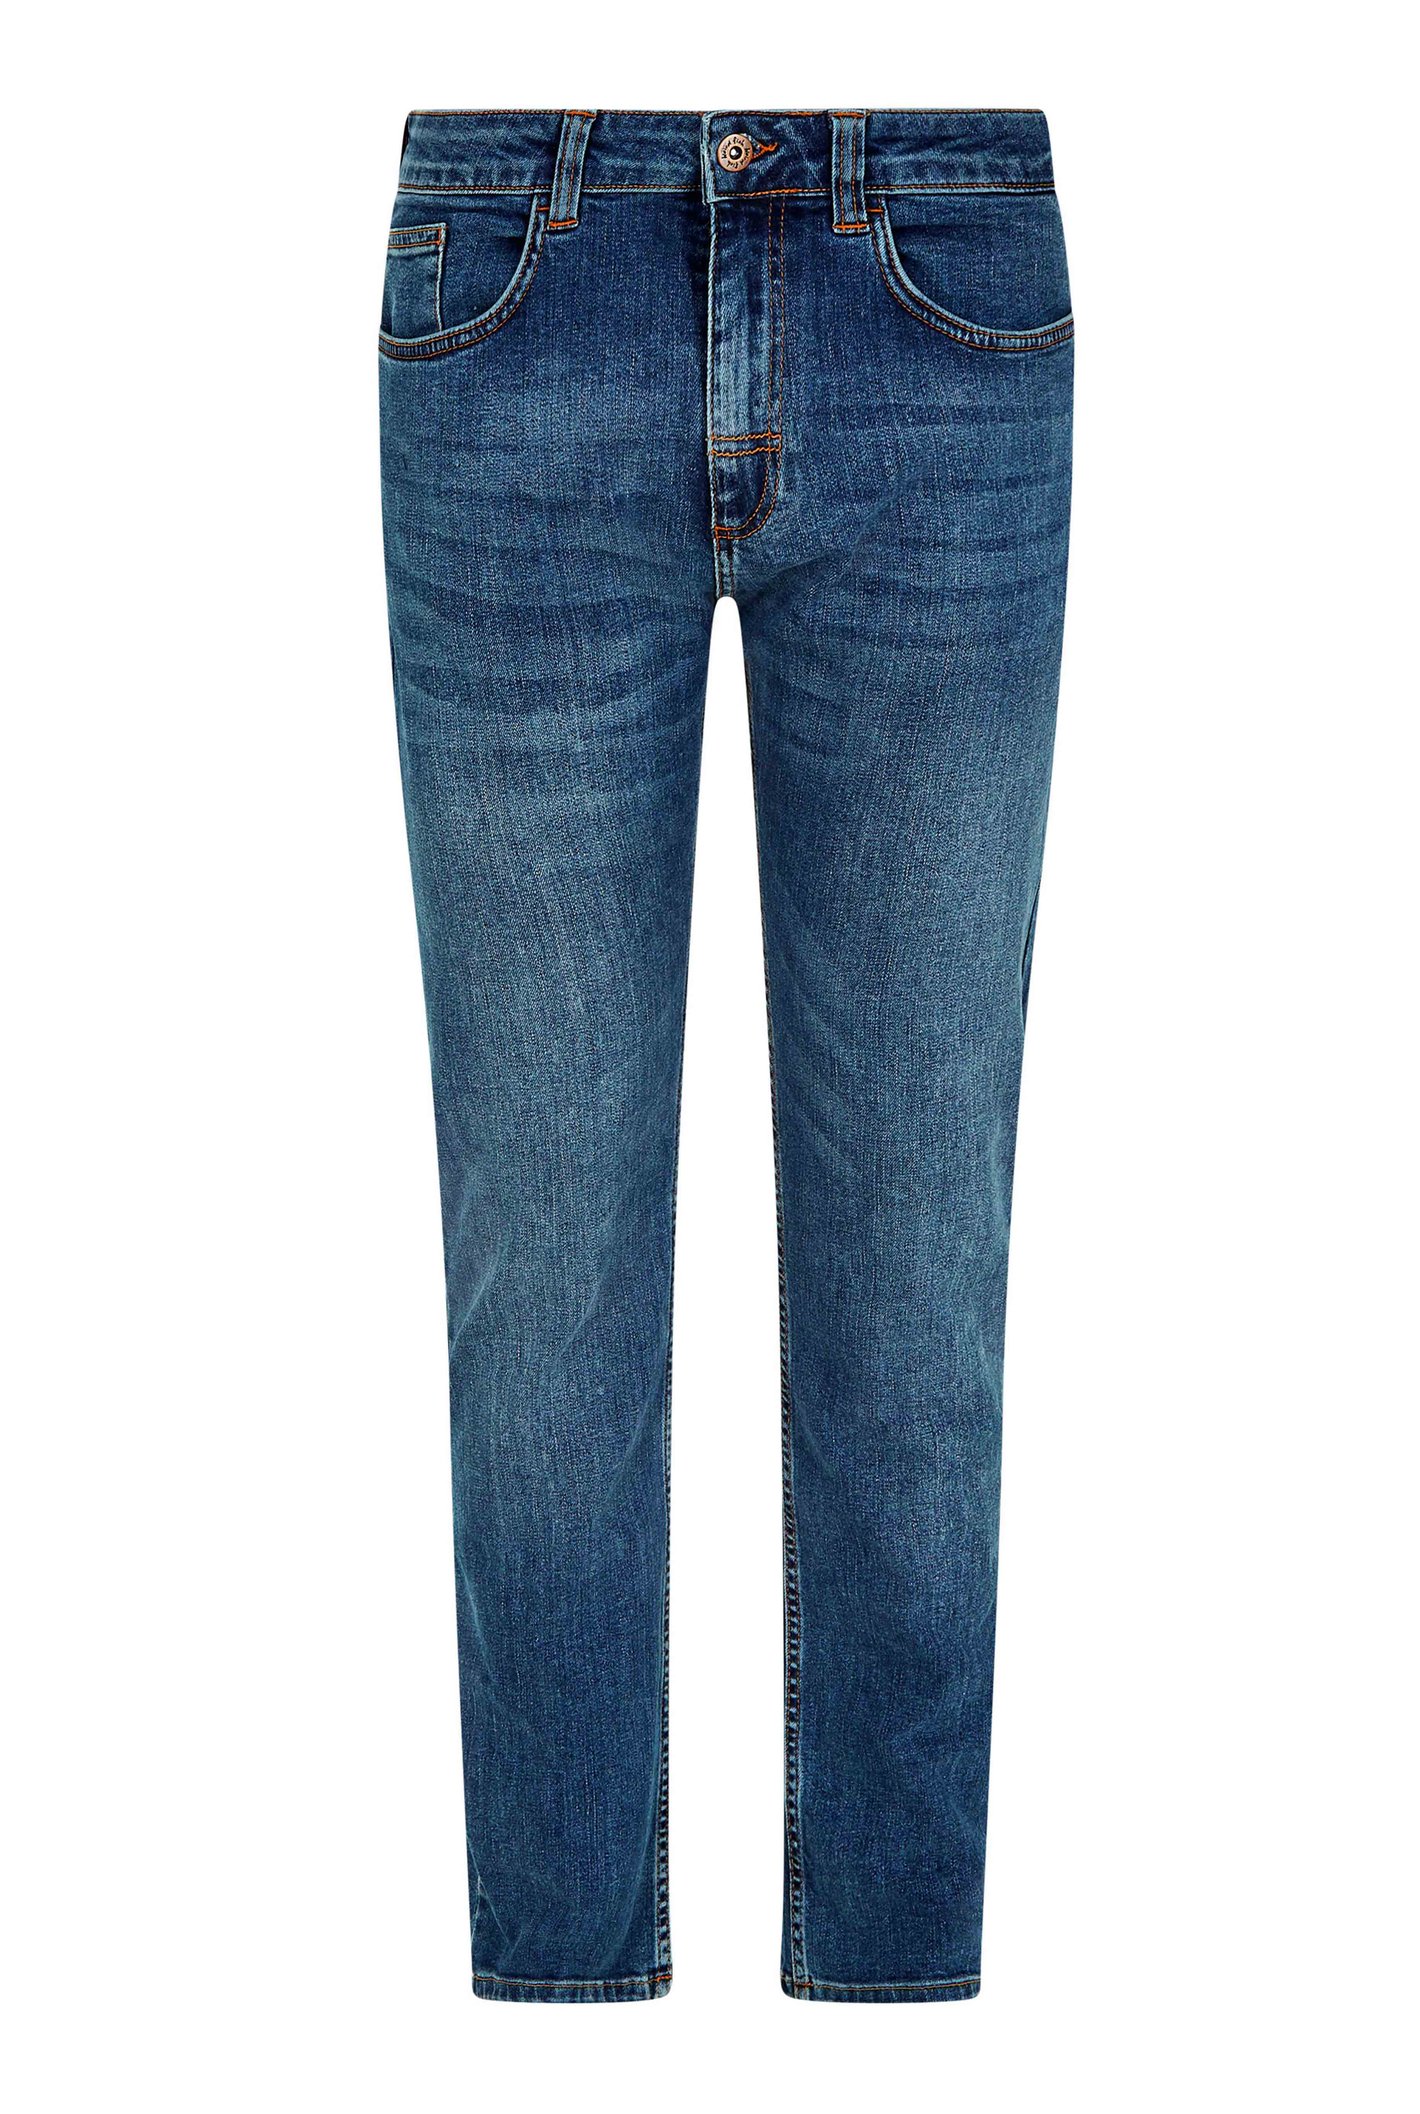 Weird Fish Robson Organic Classic Stretch Denim Jeans Denim Size 32 Long